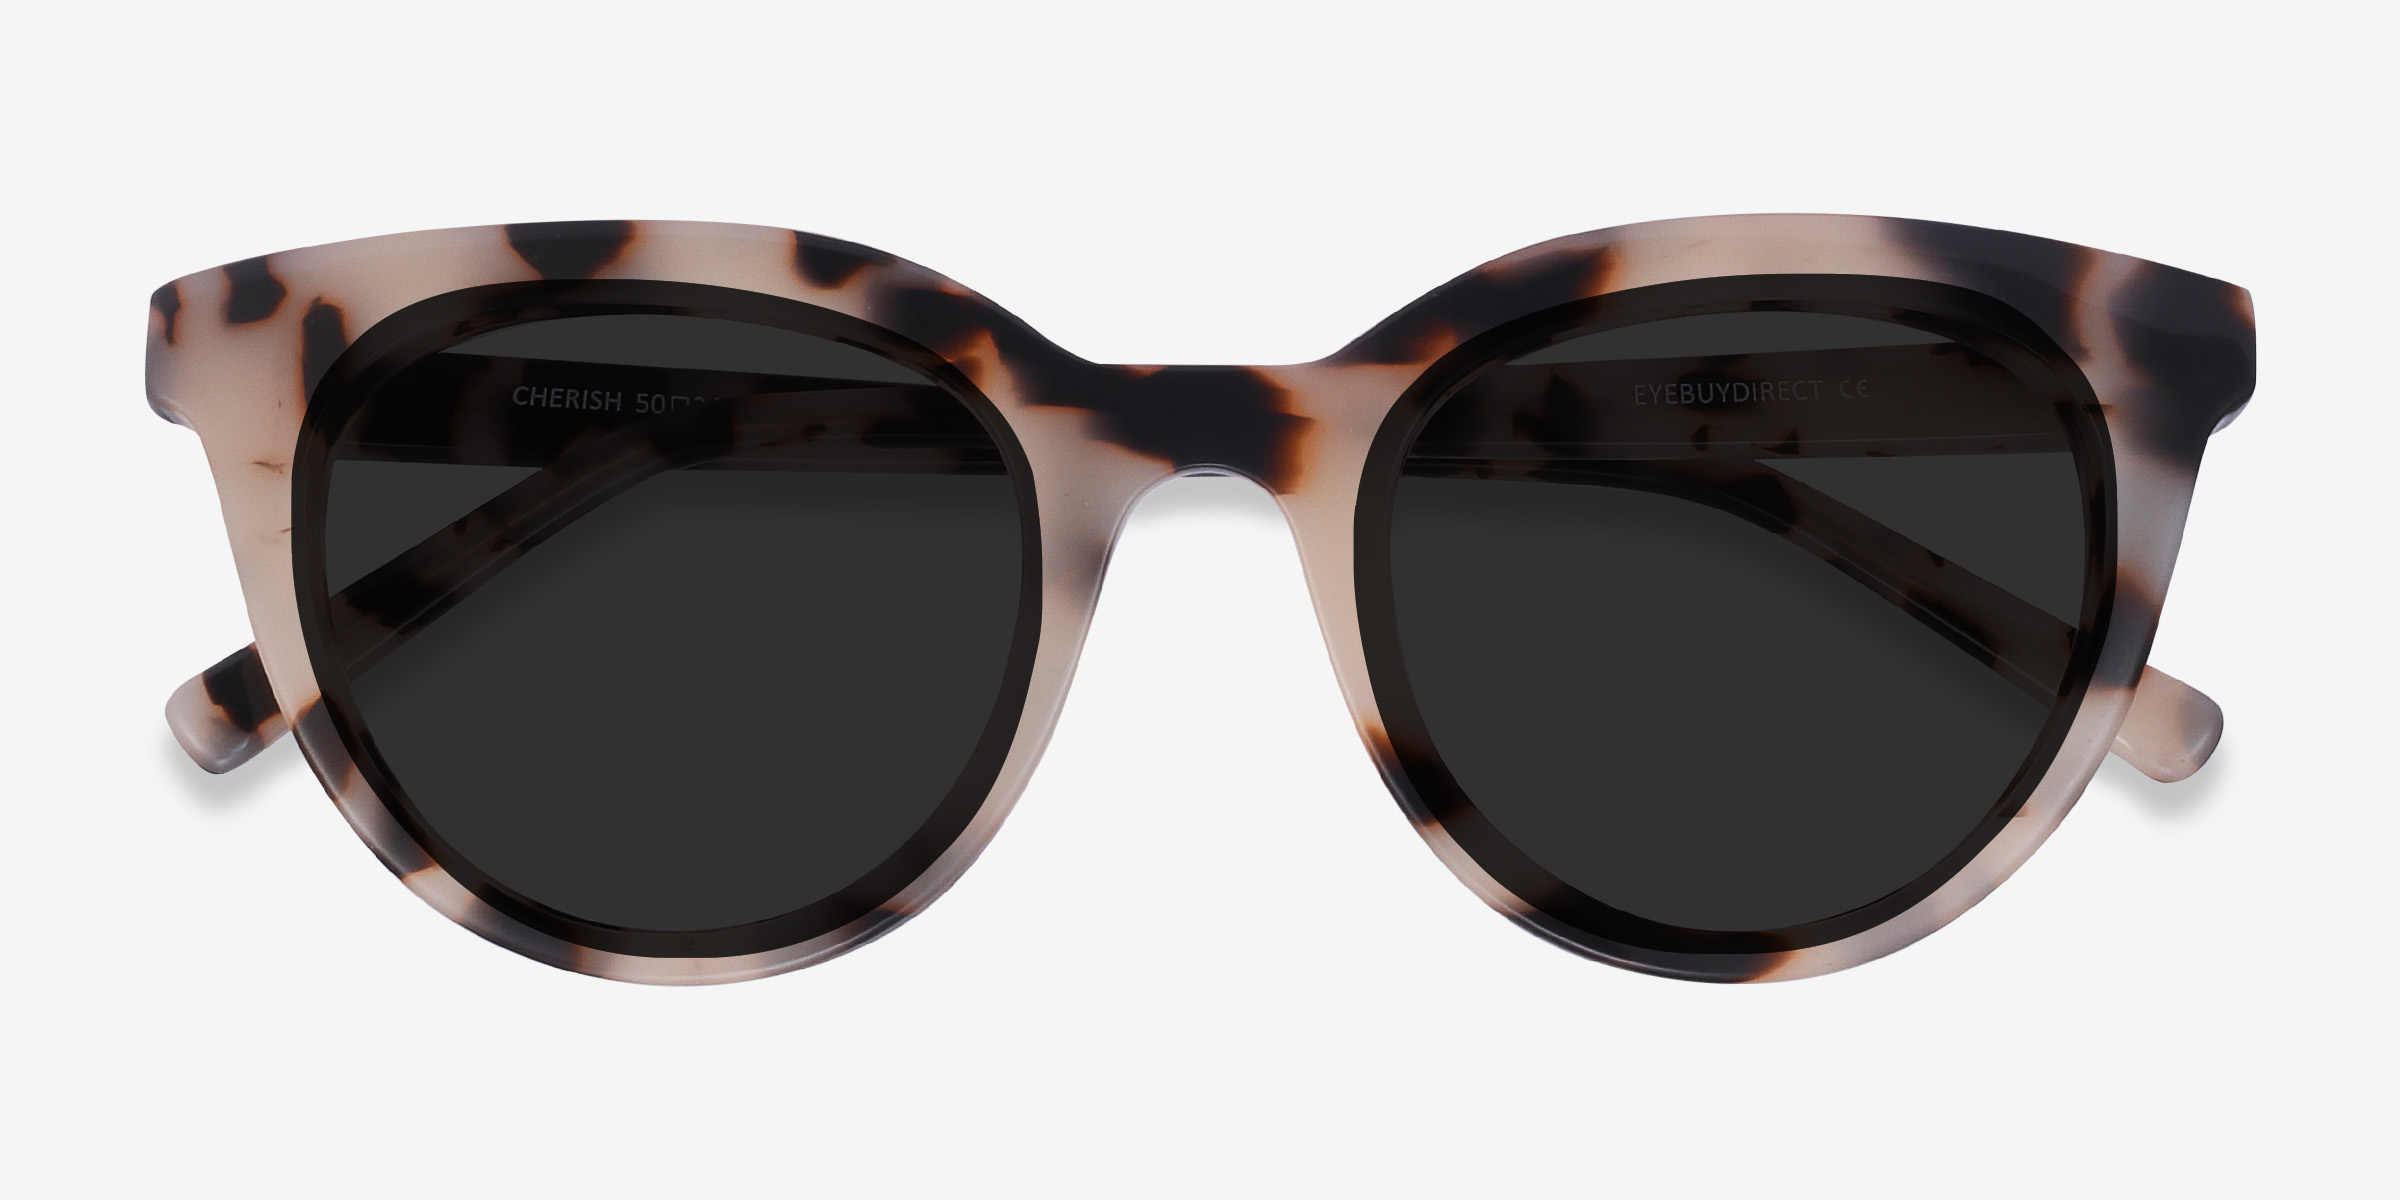 Cherish - Cat Eye Ivory Tortoise Frame Sunglasses For Women | Eyebuydirect